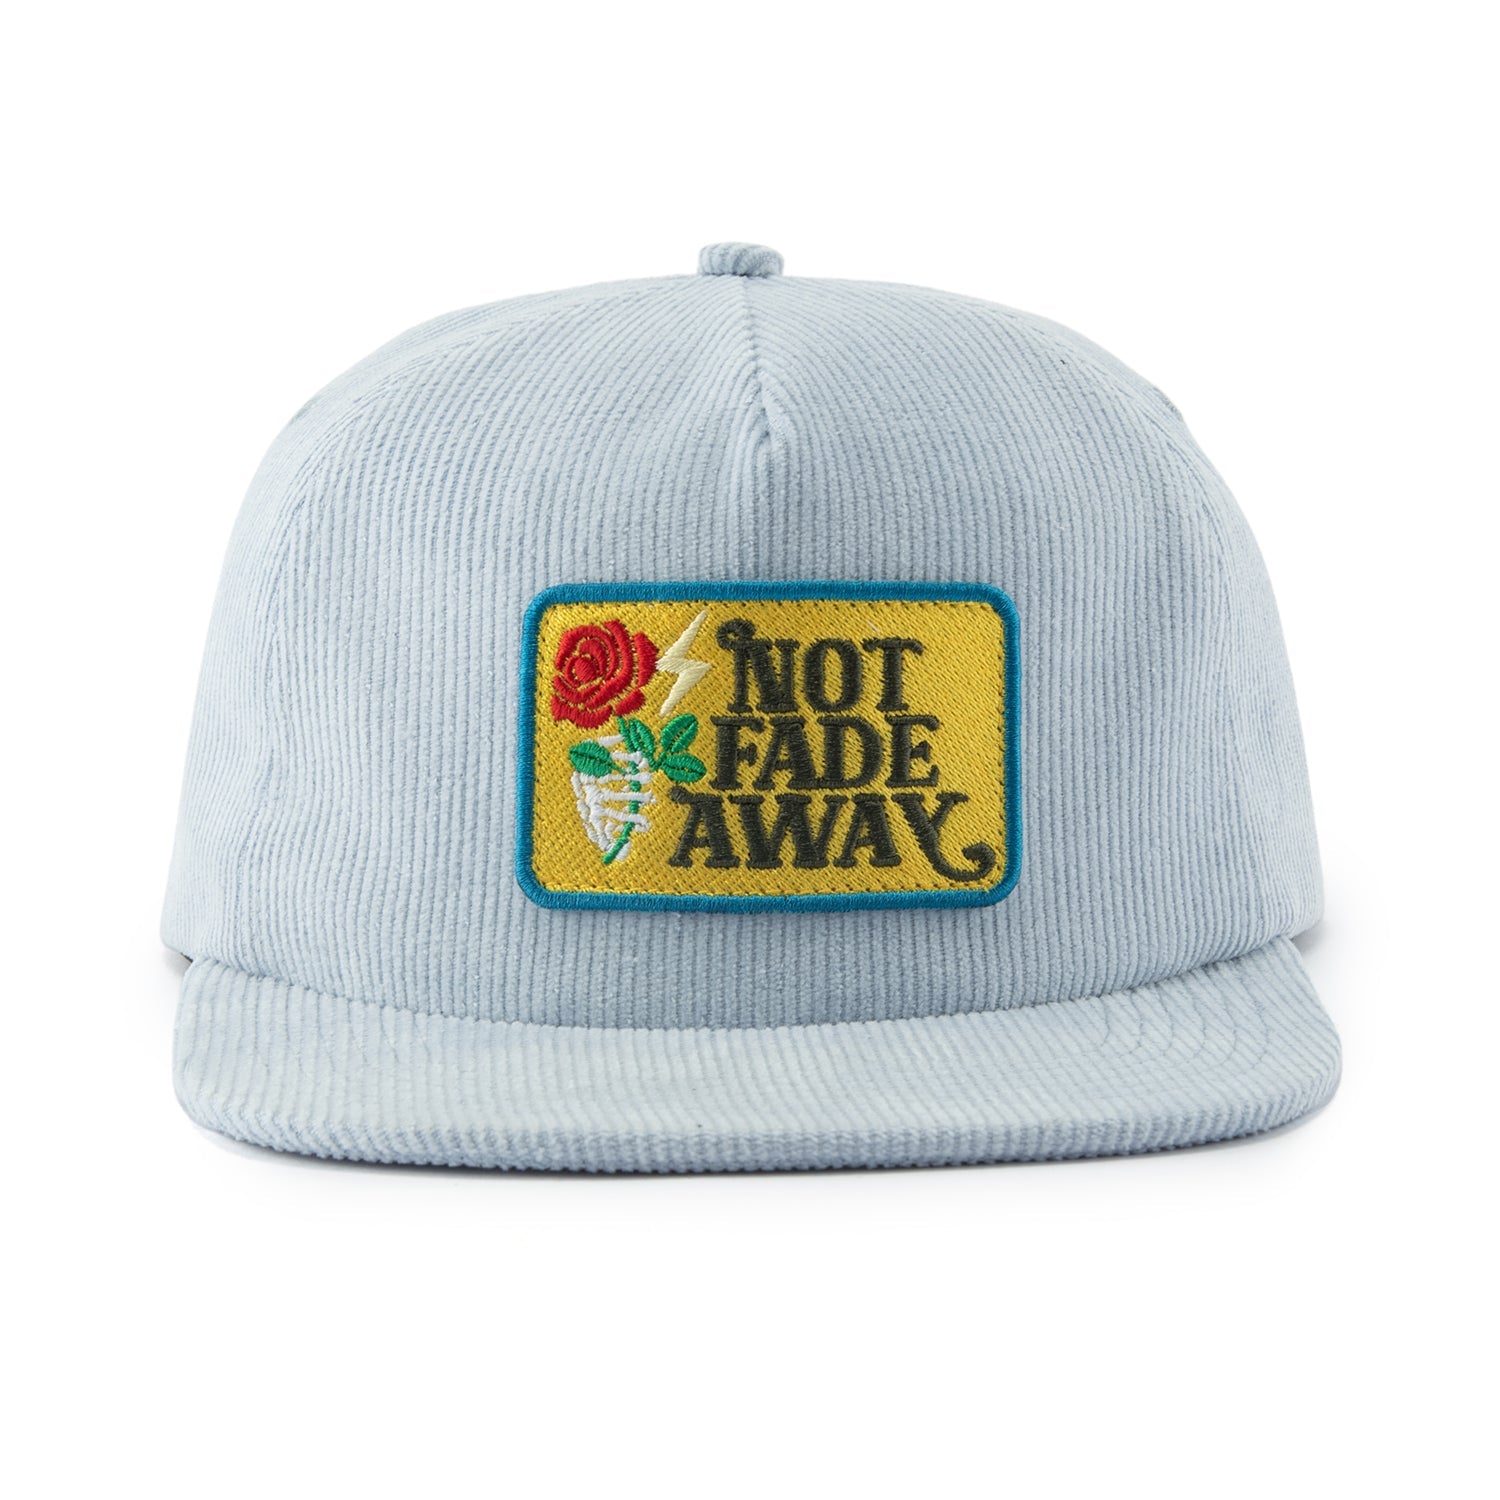 “Not Fade Away” Cord Snapback Hat by Yusuke Komori - Teton Gravity Research #color_baby blue